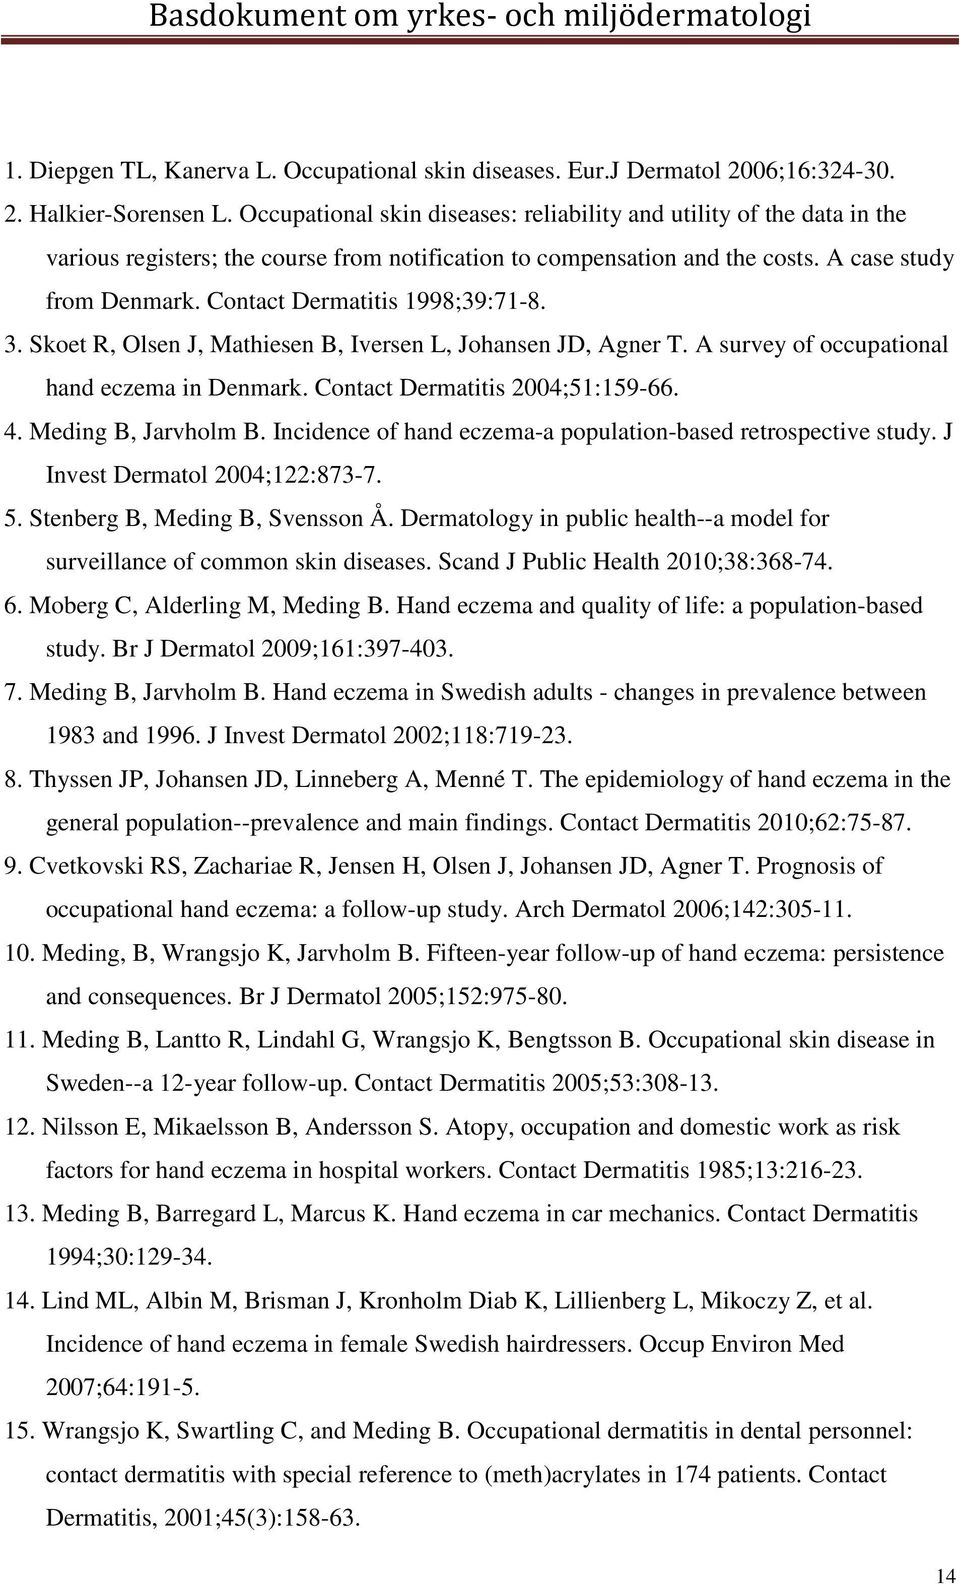 Contact Dermatitis 1998;39:71-8. 3. Skoet R, Olsen J, Mathiesen B, Iversen L, Johansen JD, Agner T. A survey of occupational hand eczema in Denmark. Contact Dermatitis 2004;51:159-66. 4.